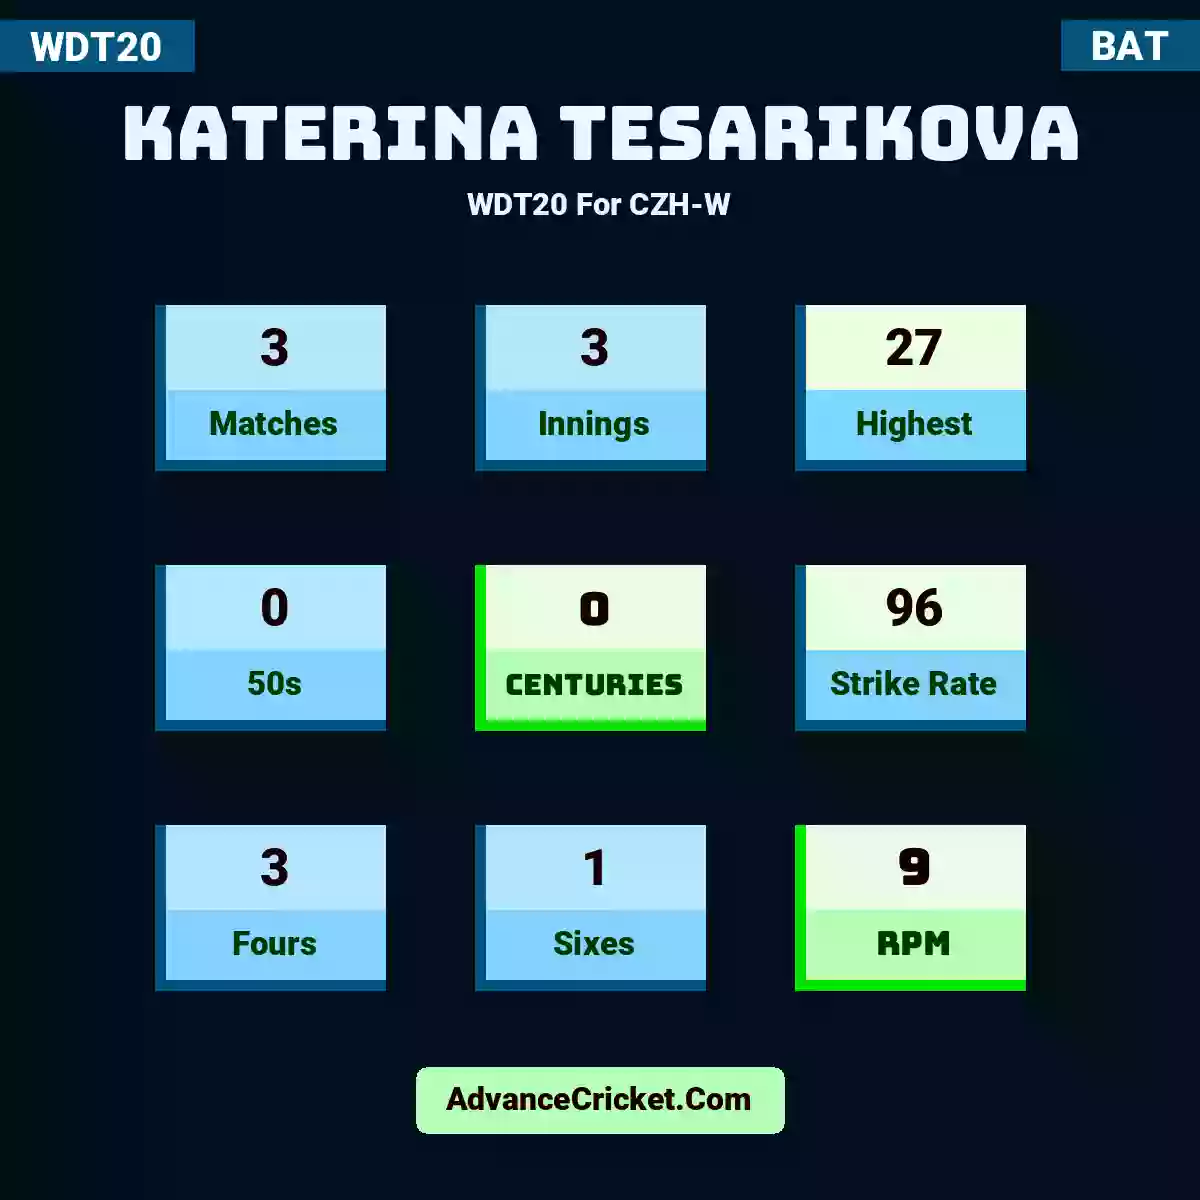 Katerina Tesarikova WDT20  For CZH-W, Katerina Tesarikova played 3 matches, scored 27 runs as highest, 0 half-centuries, and 0 centuries, with a strike rate of 96. K.Tesarikova hit 3 fours and 1 sixes, with an RPM of 9.